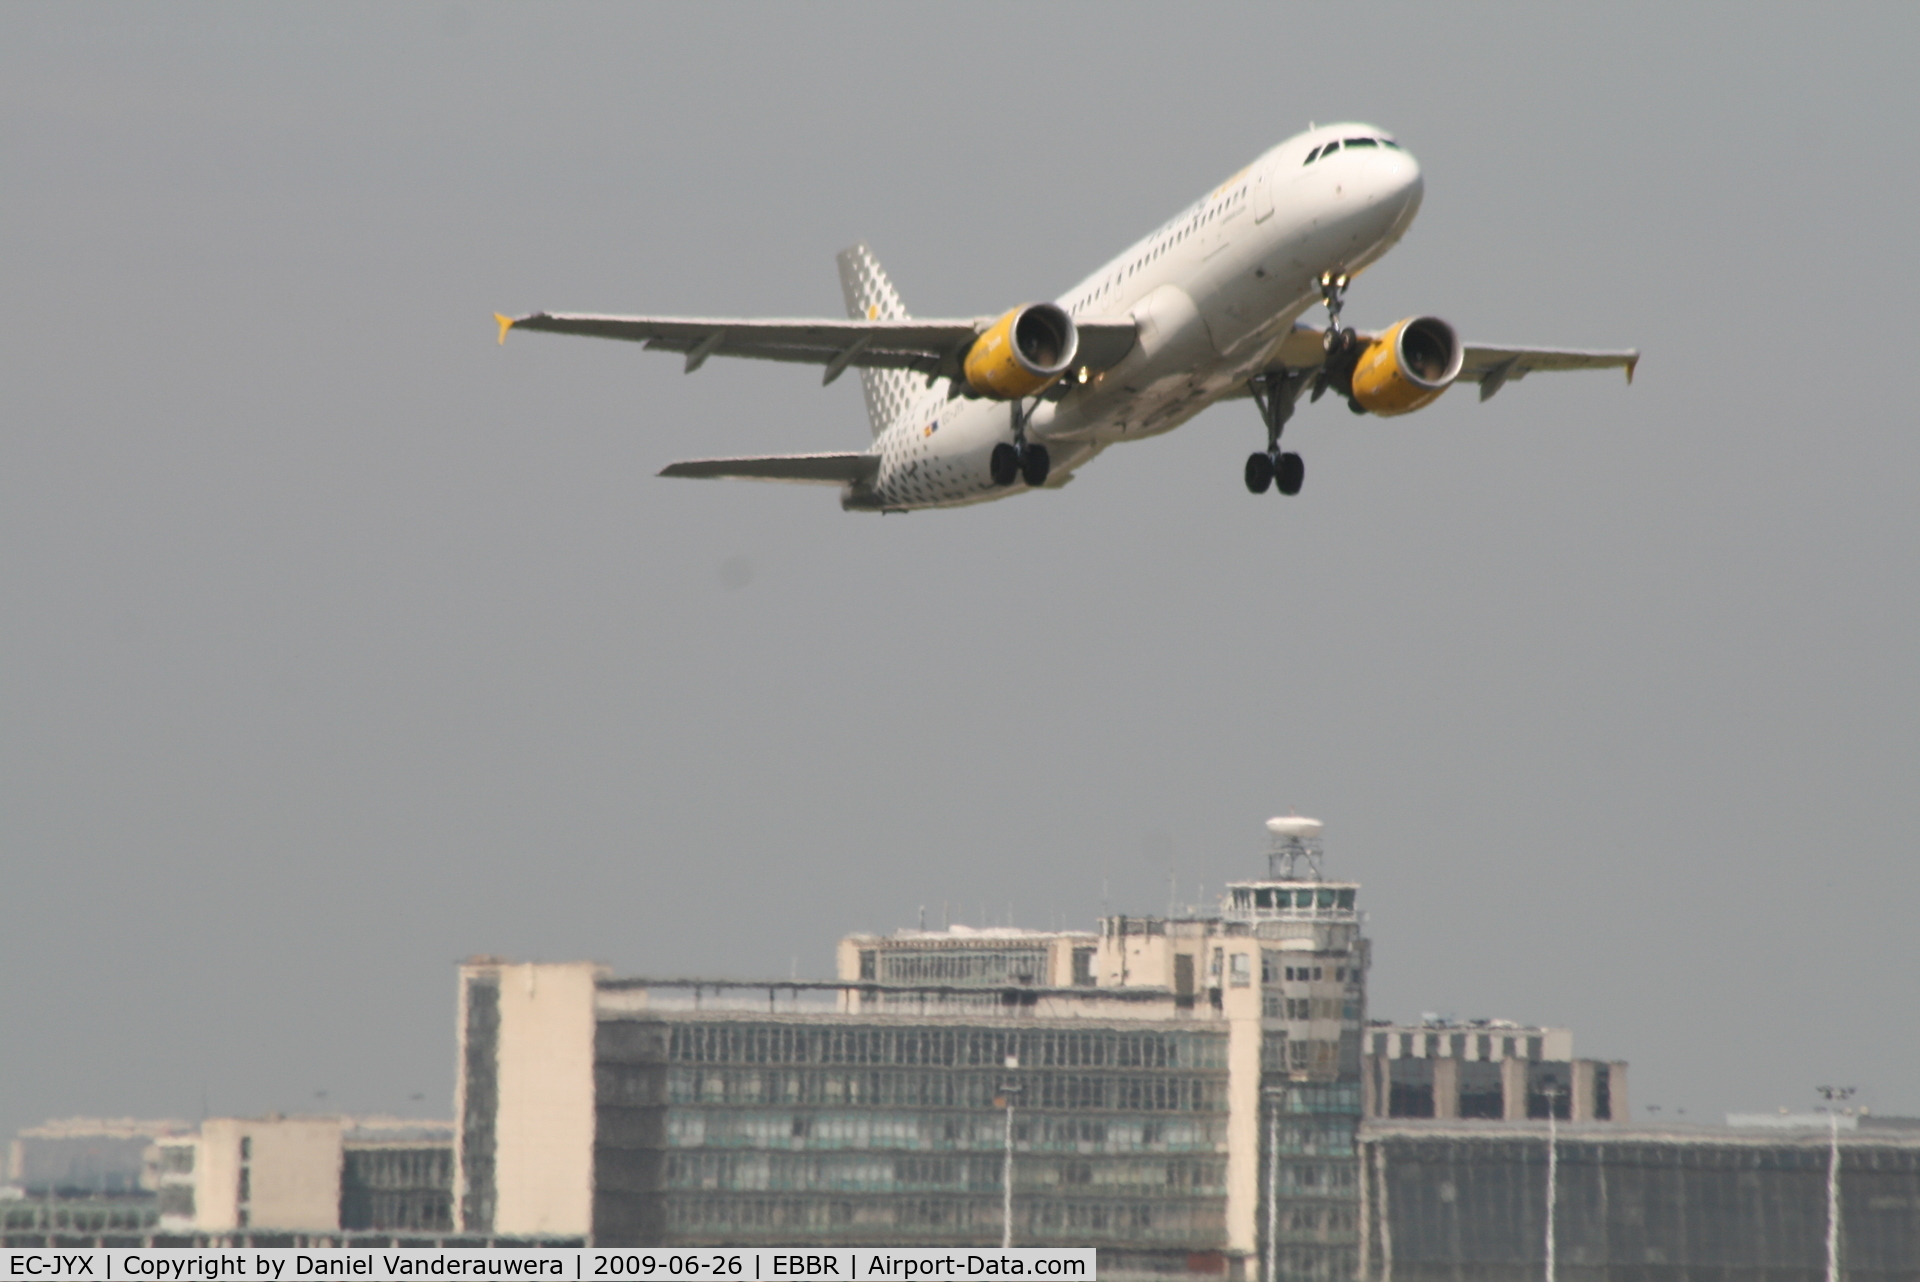 EC-JYX, 2006 Airbus A320-214 C/N 2962, Flight VY7061 is taking off from rwy 07R